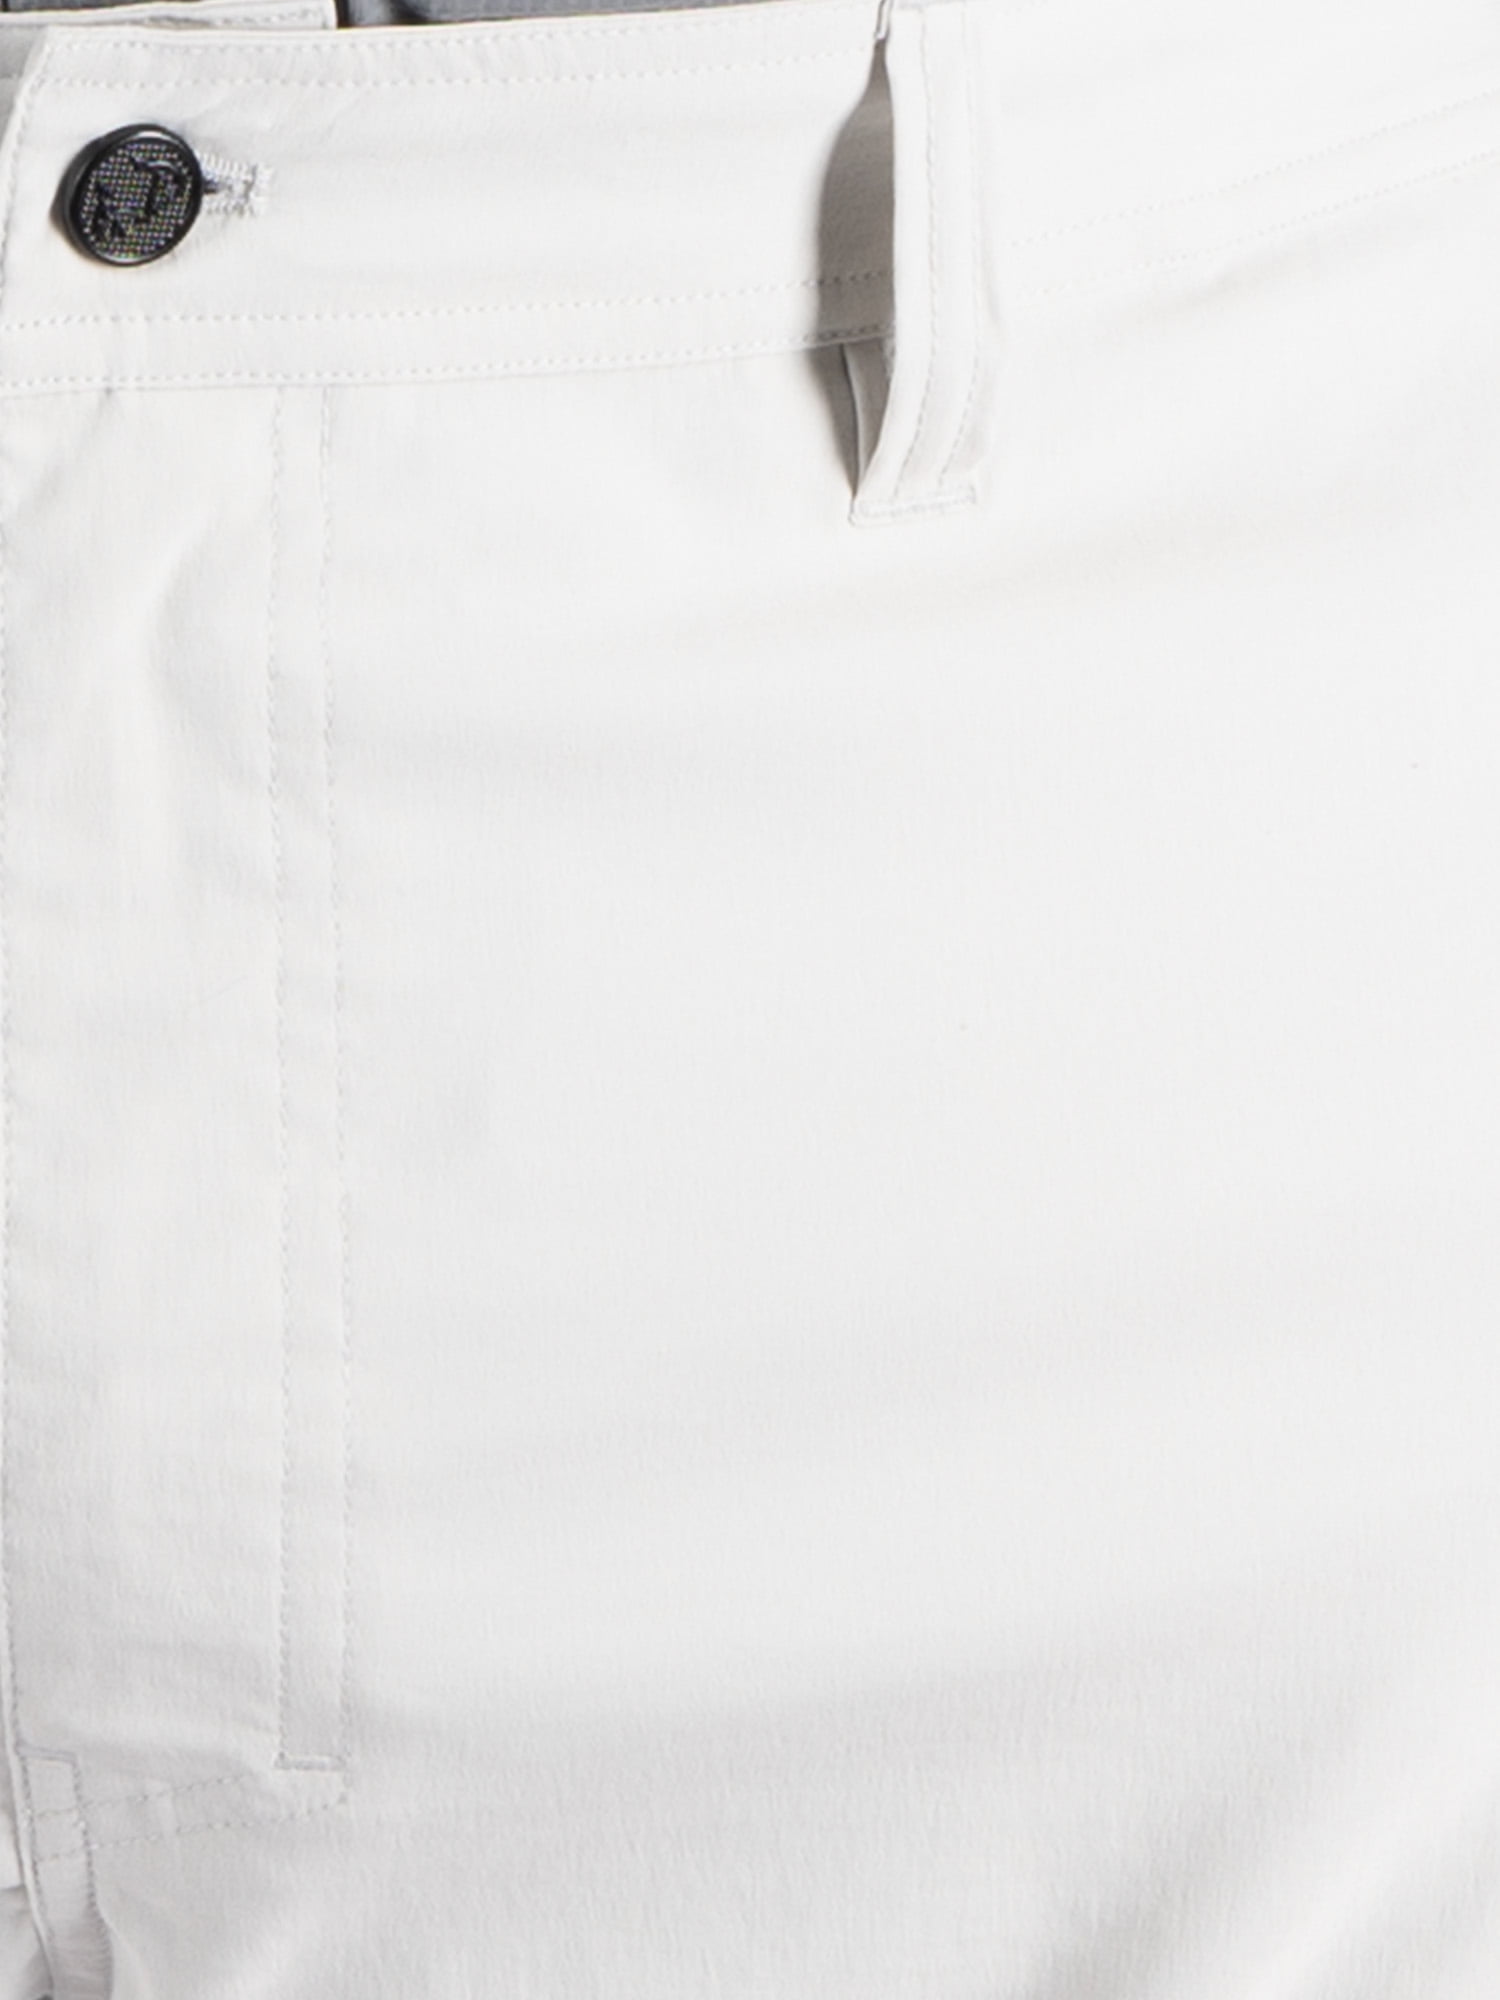 Realtree Men's Hybrid Fishing Shorts, Athletic Performance Short Pants in  Light Grey, Sizes S-3XL